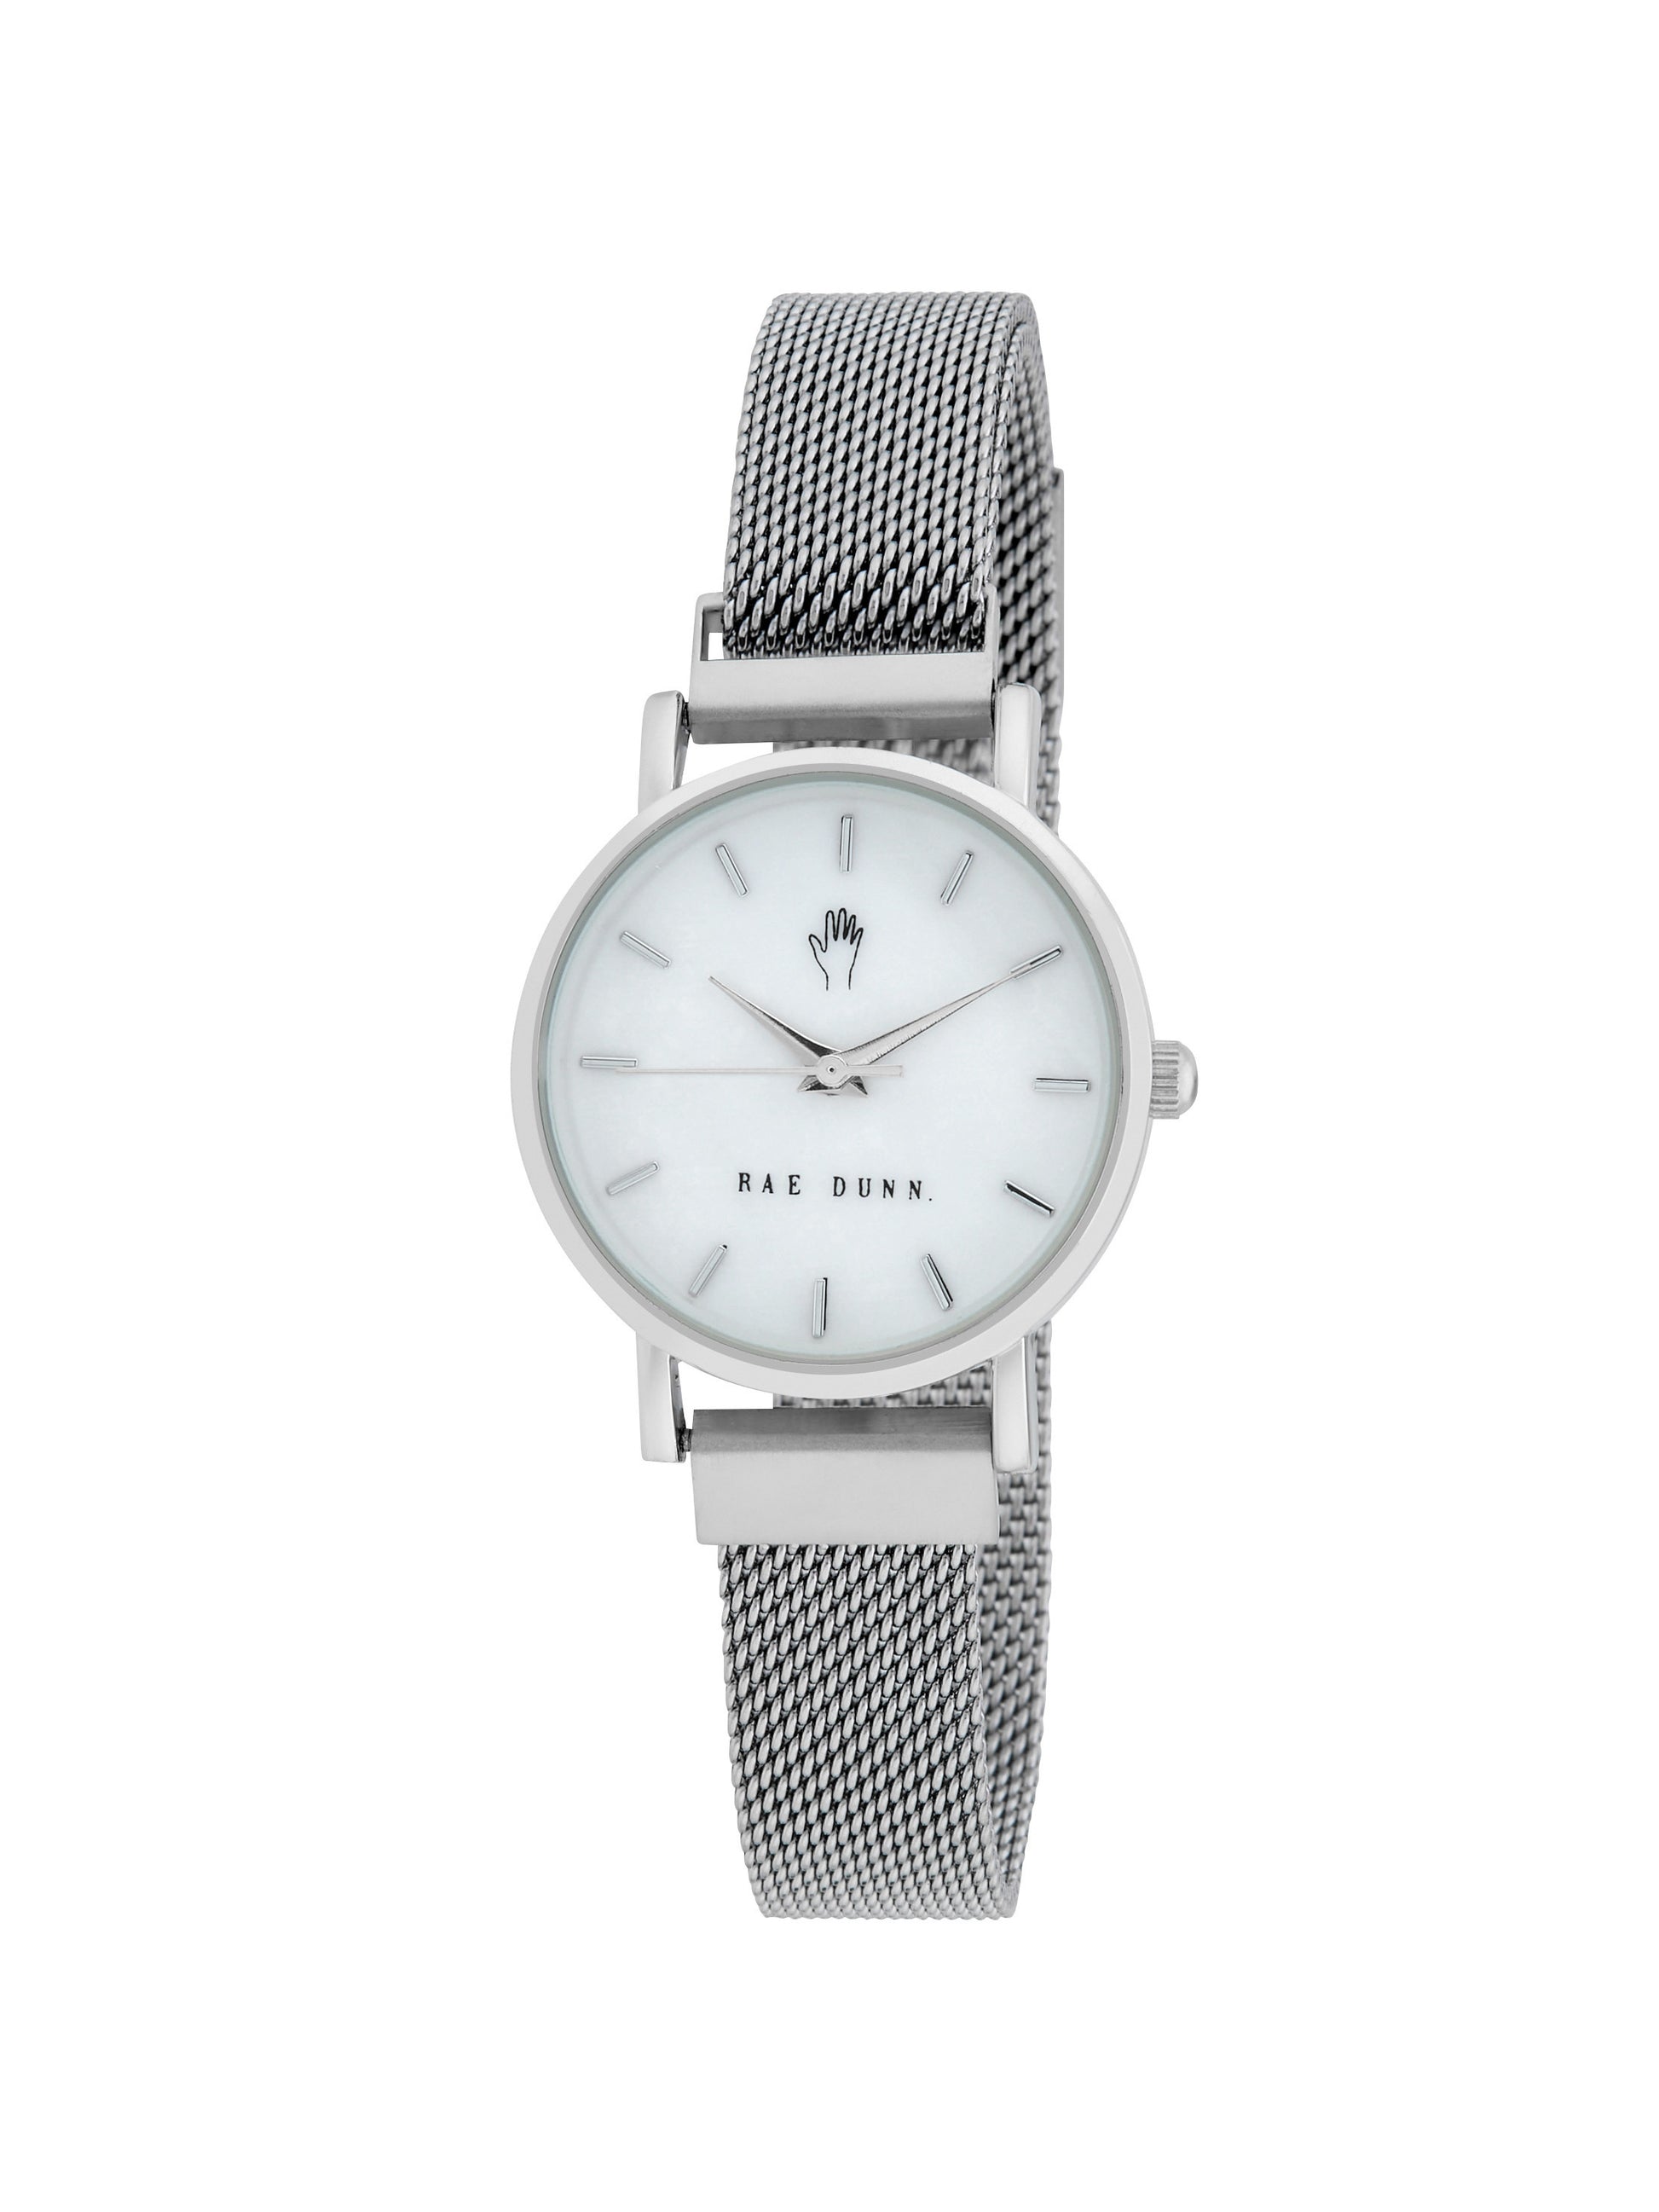 TARA Small Round Face Mesh Bracelet Watch in Silver, 29mm - Rae Dunn Wear - Watch